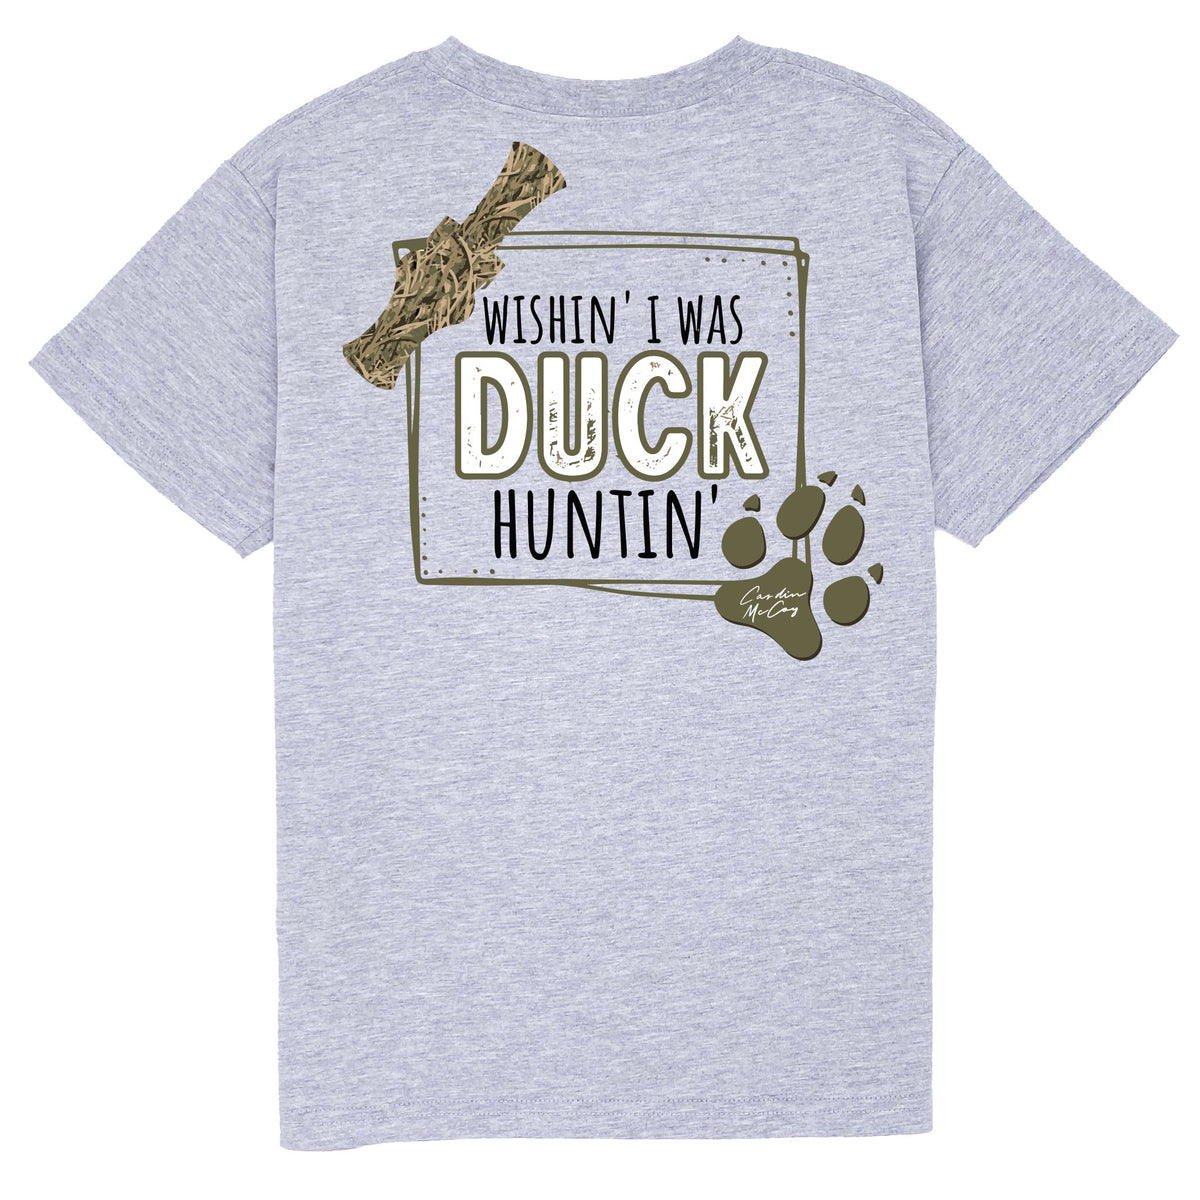 Kids' Wishin' I Was Duck Huntin' Short Sleeve Tee Short Sleeve T-Shirt Cardin McCoy Heather Gray No Pocket XXS (2/3) 